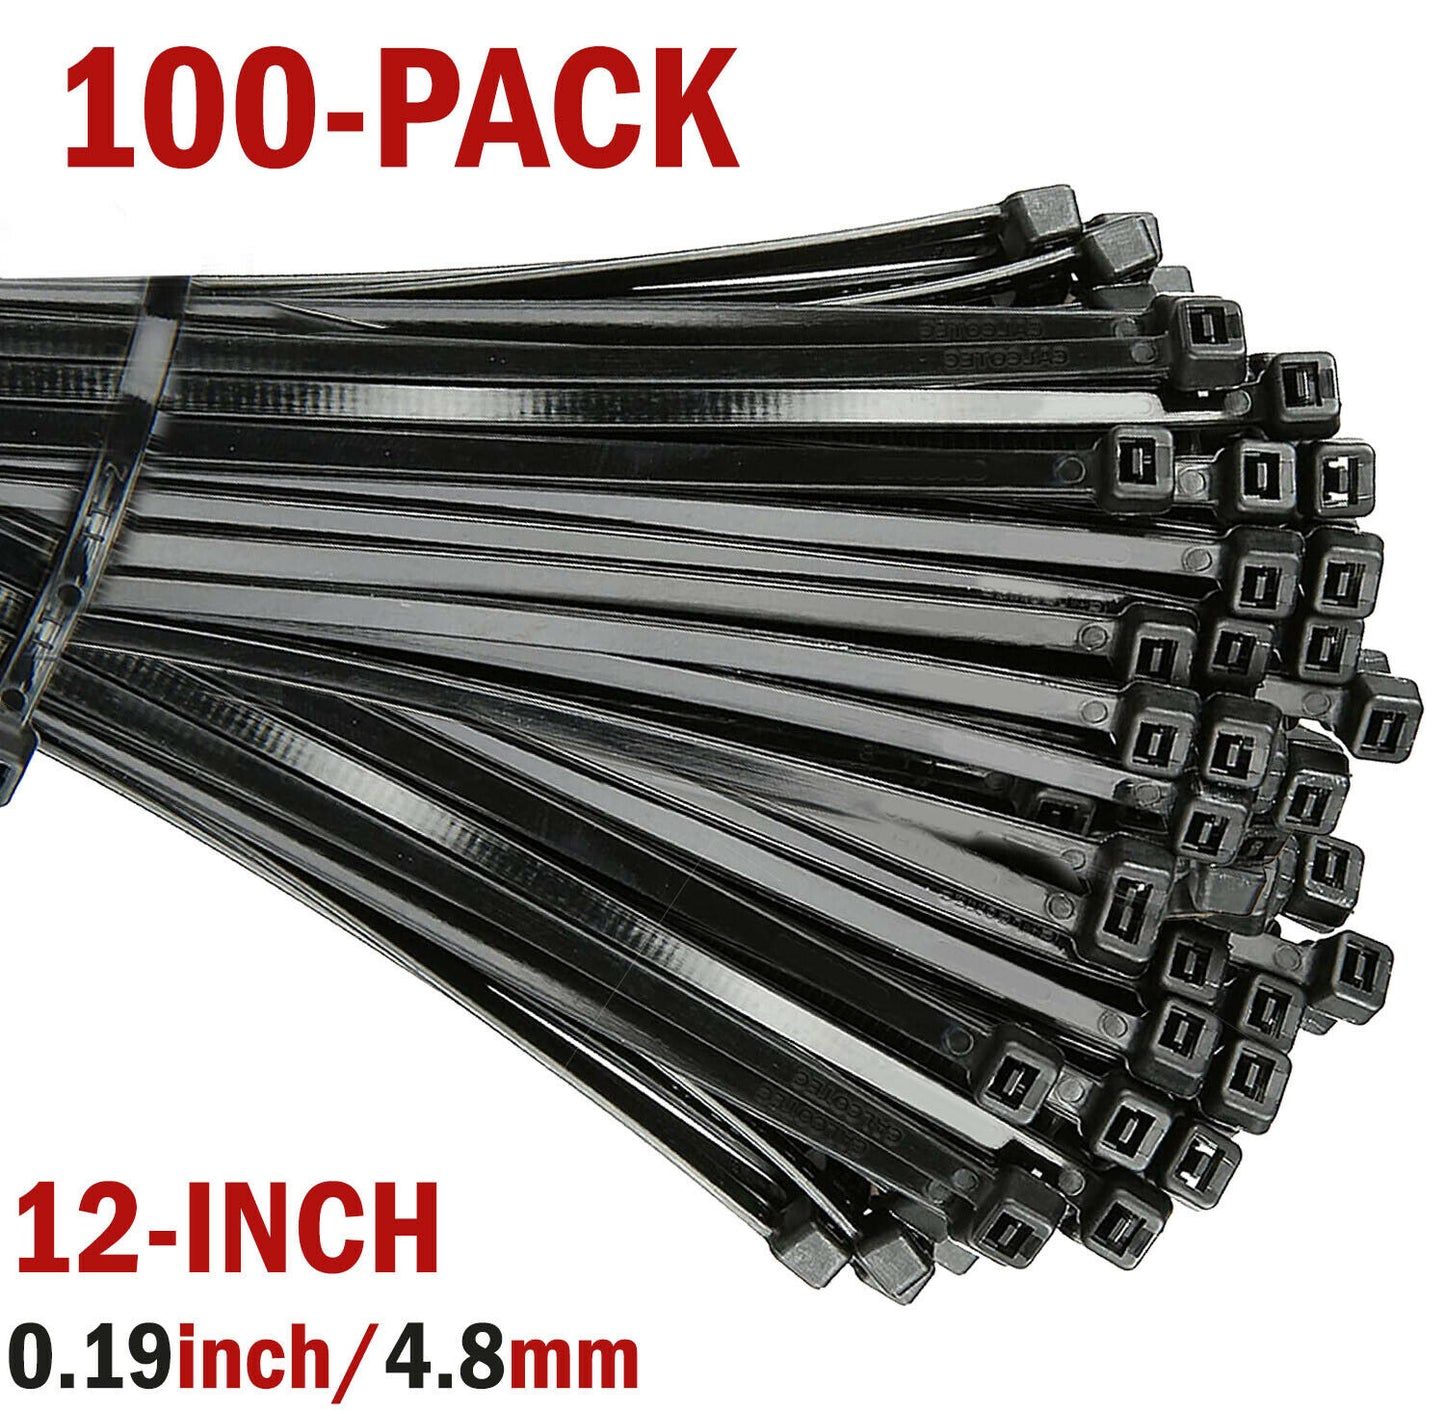 100 bridas para cables, bridas para cables de 12 pulgadas de largo, envoltura de cordón de nailon súper fuerte, color negro